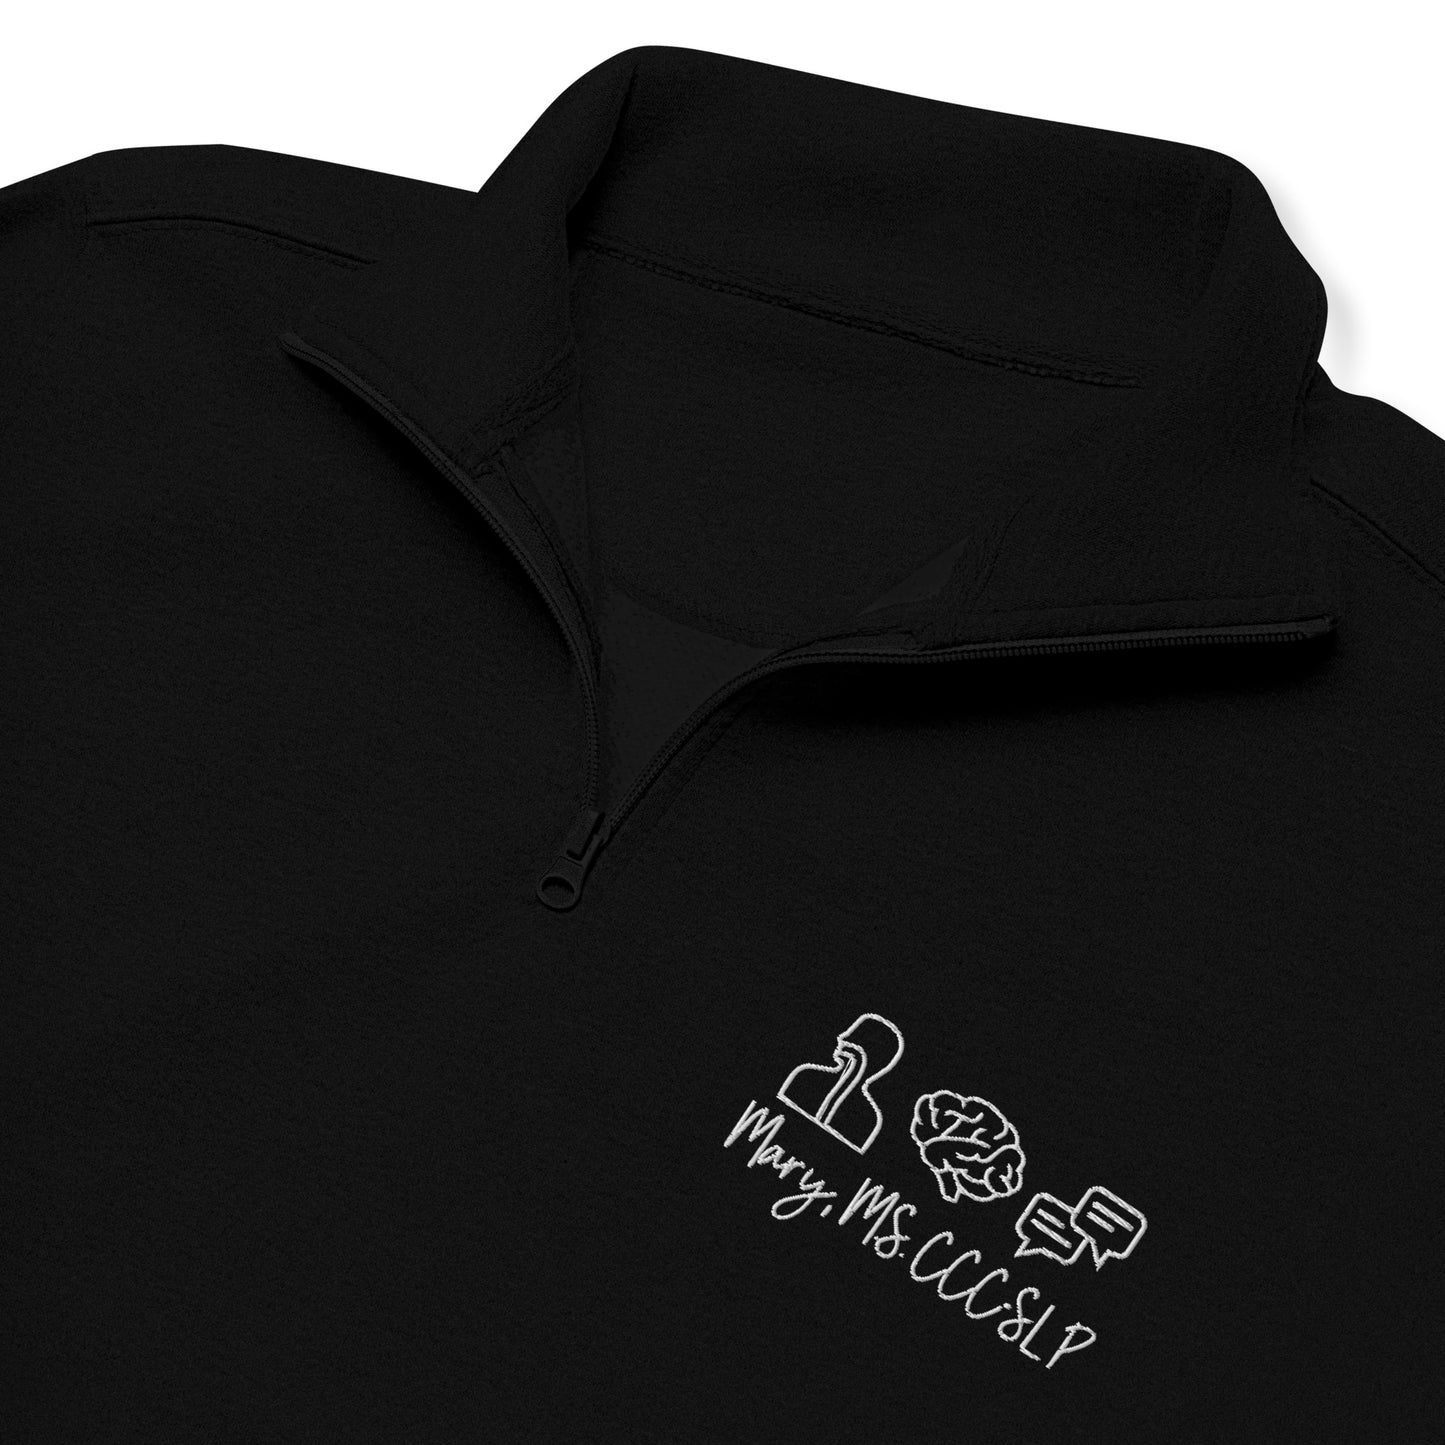 Personalized Embroidered Med SLP Quarter Zip Sweatshirt